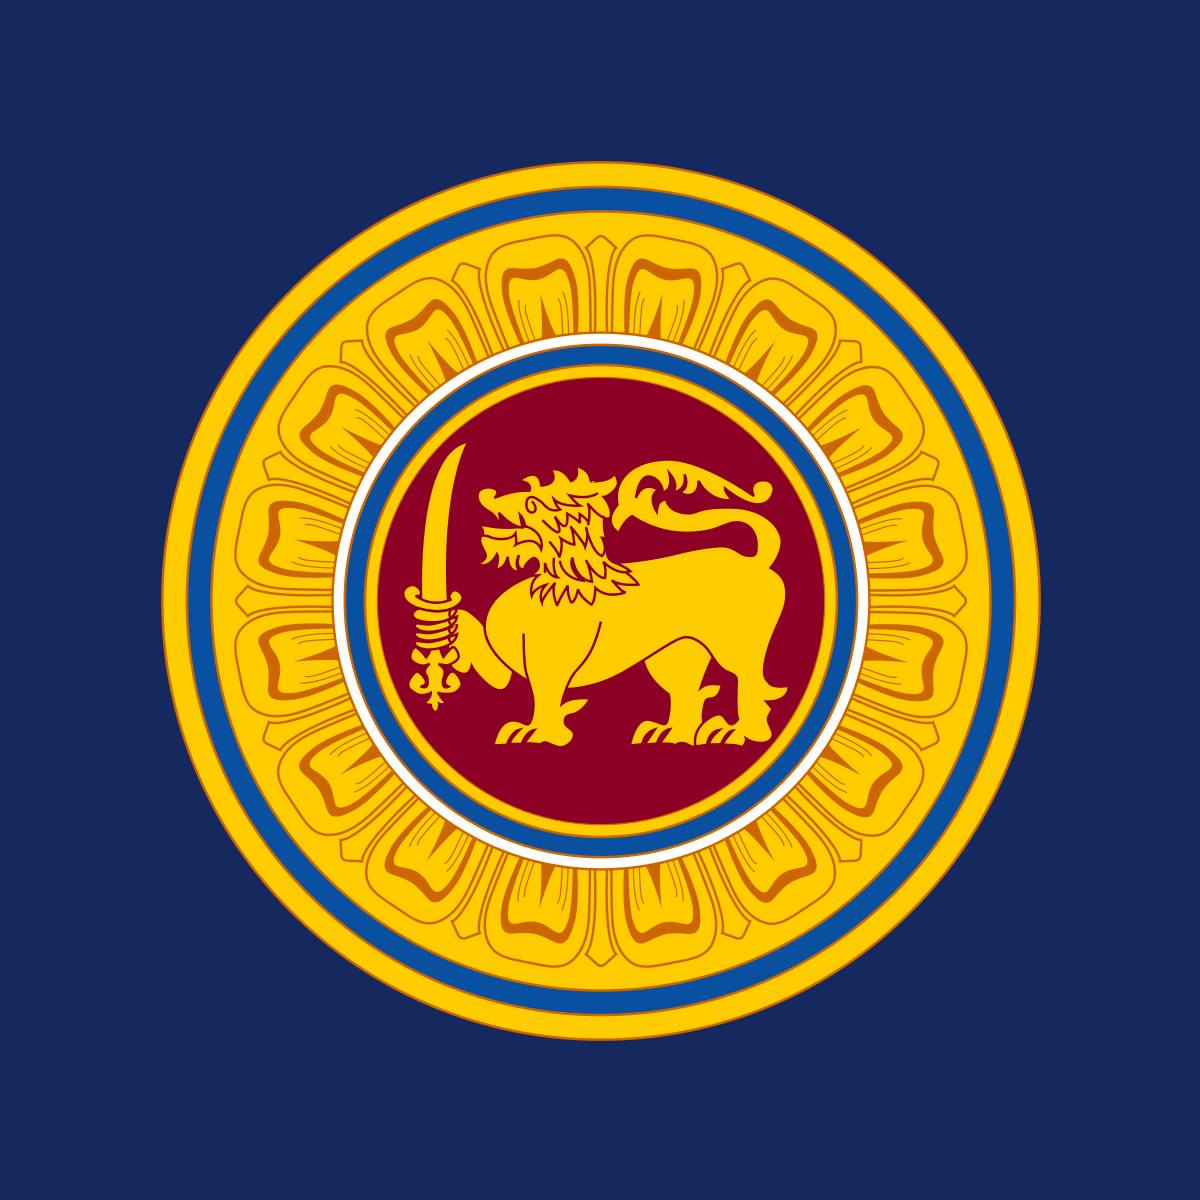 Sri Lanka national cricket team - Wikipedia